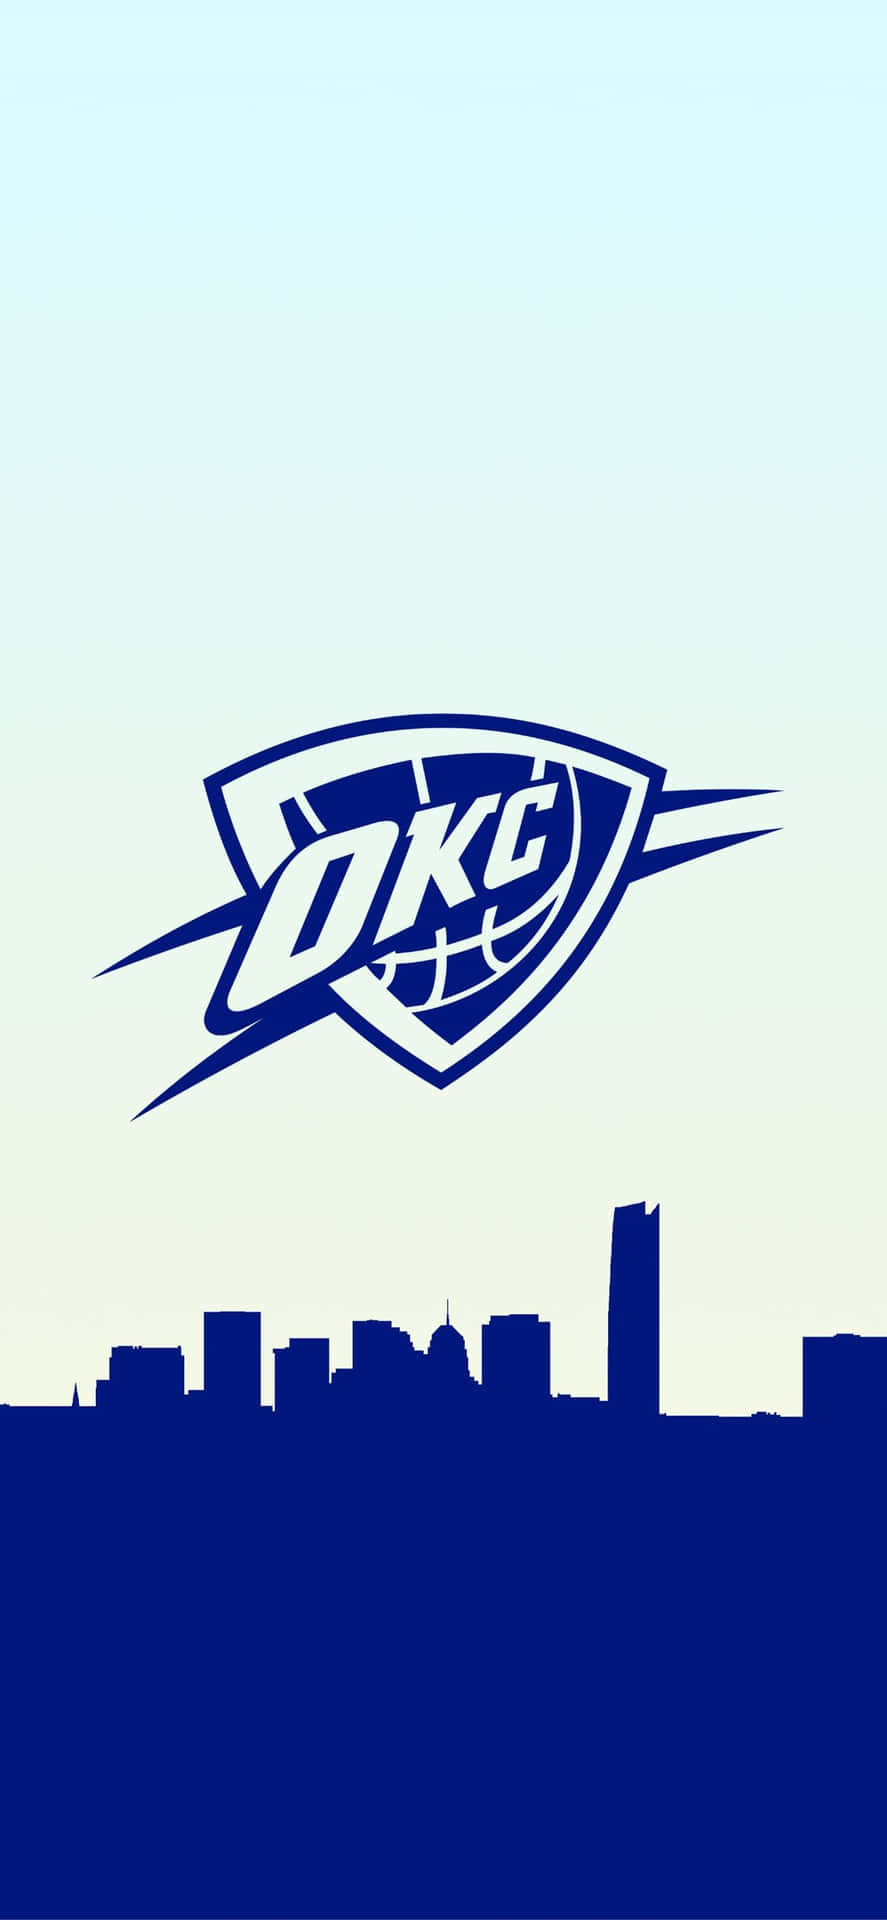 Logotipodel Equipo De Baloncesto Oklahoma City Thunders De La Nba. Fondo de pantalla